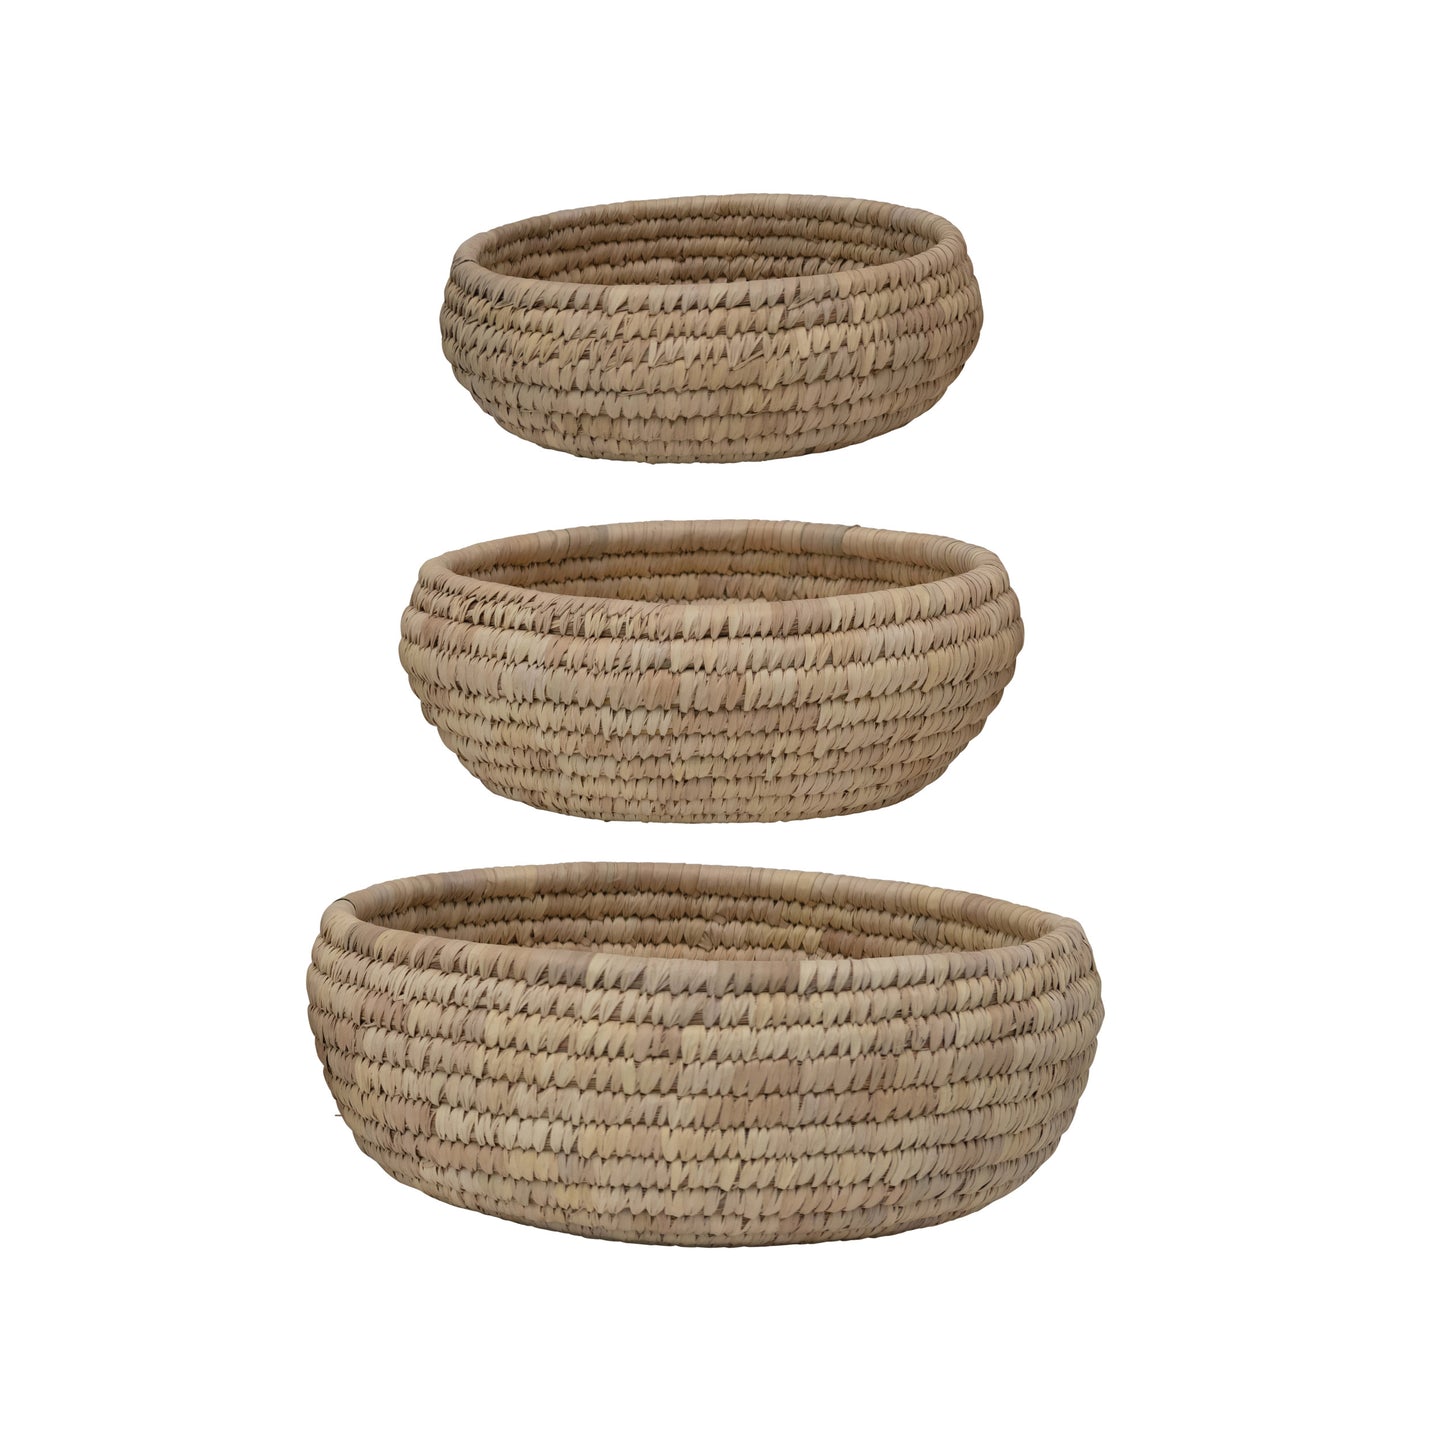 Woven Grass & Date Leaf Basket, multiple styles